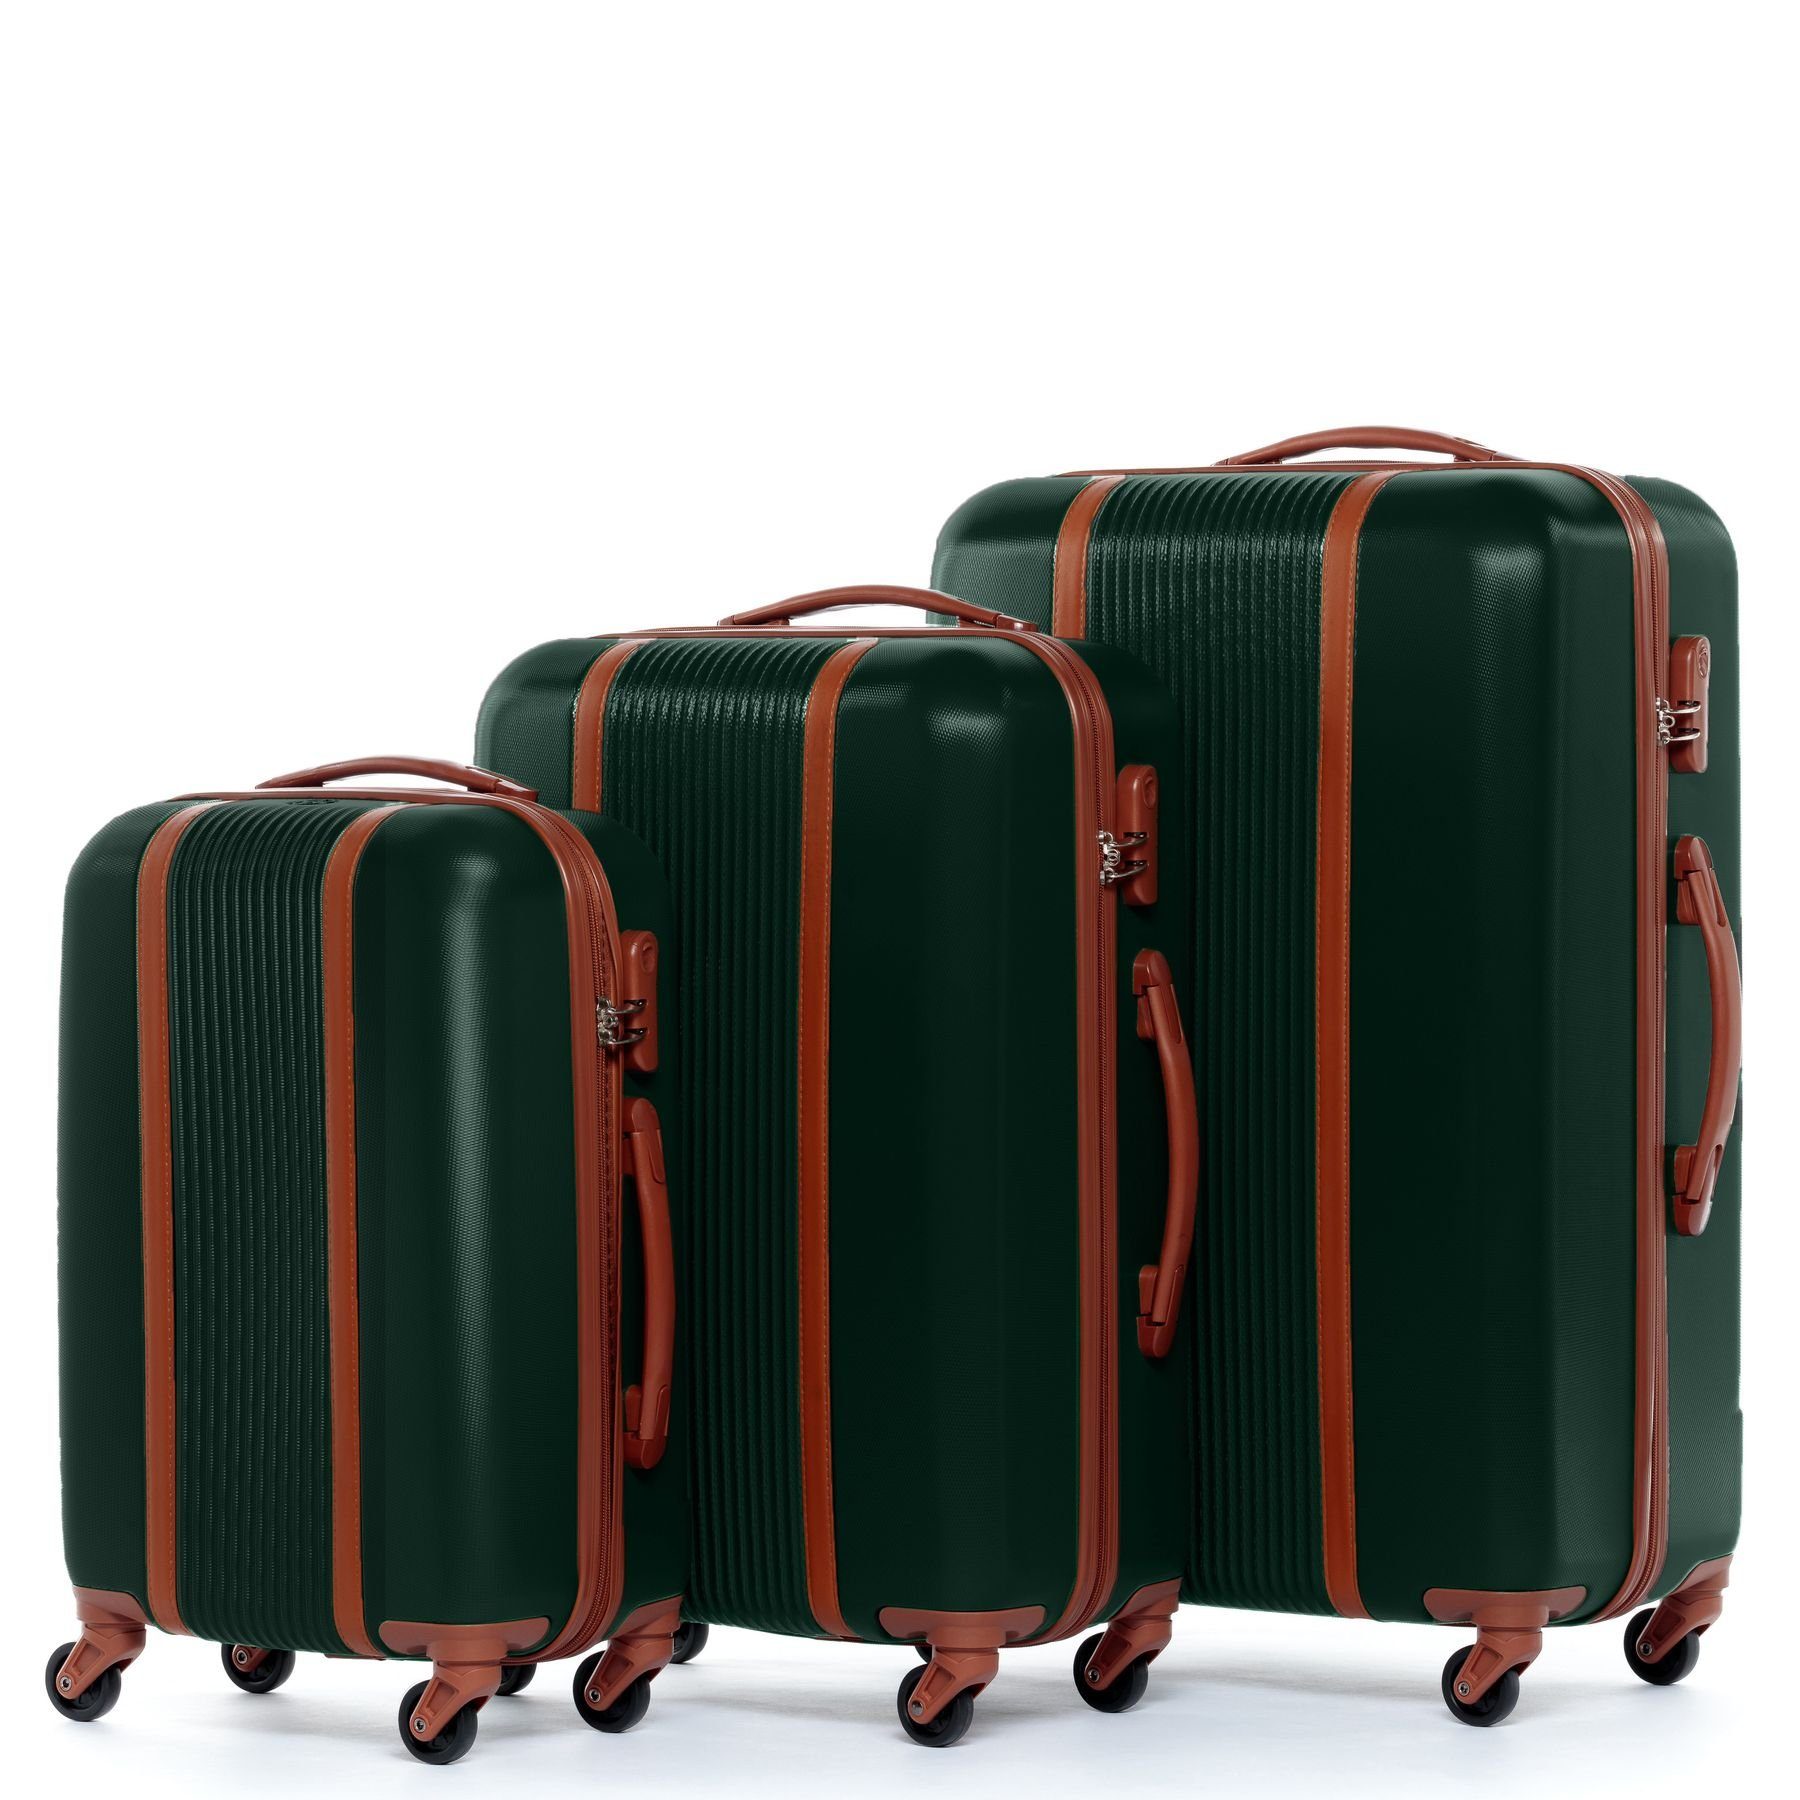 Koffer Milano, Set, 3er Kofferset Rollen, Rollkoffer teilig 4 FERGÉ Premium 3 Reisekoffer Trolley Hartschale